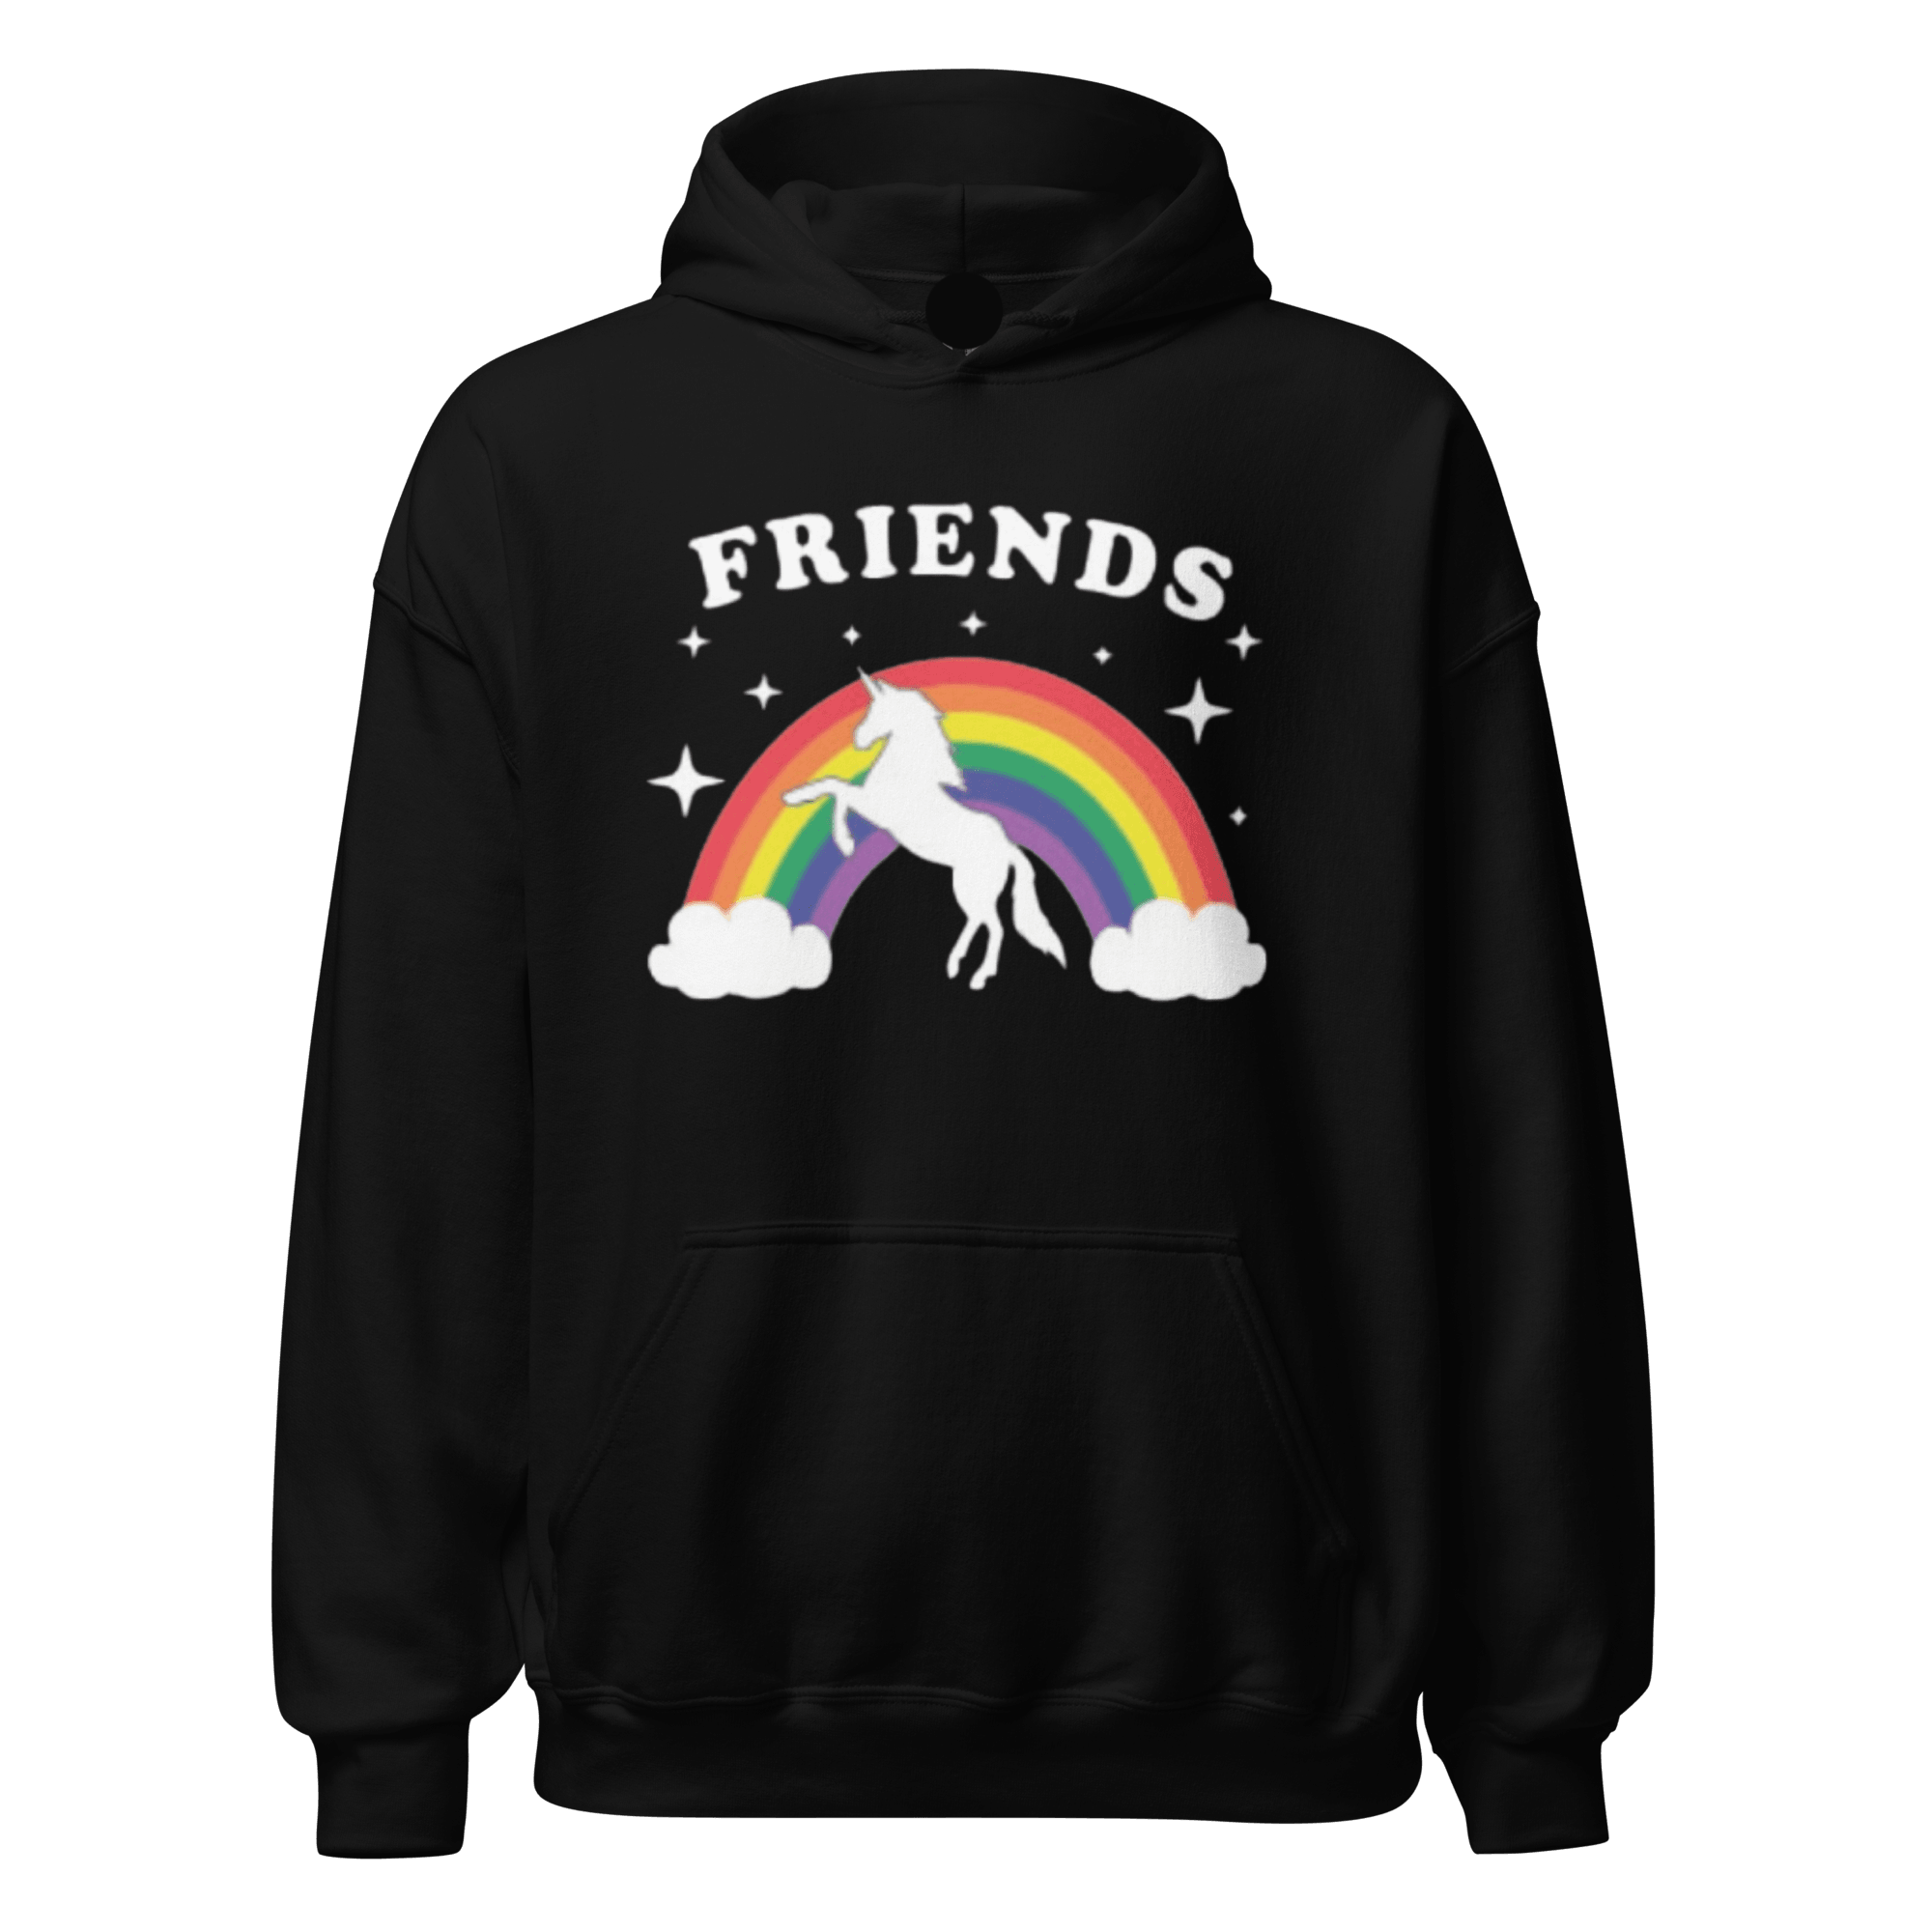 Relationship Hoodie Set Best Friends Blended Cotton Hooded Neck Ultra Soft Pullover - TopKoalaTee